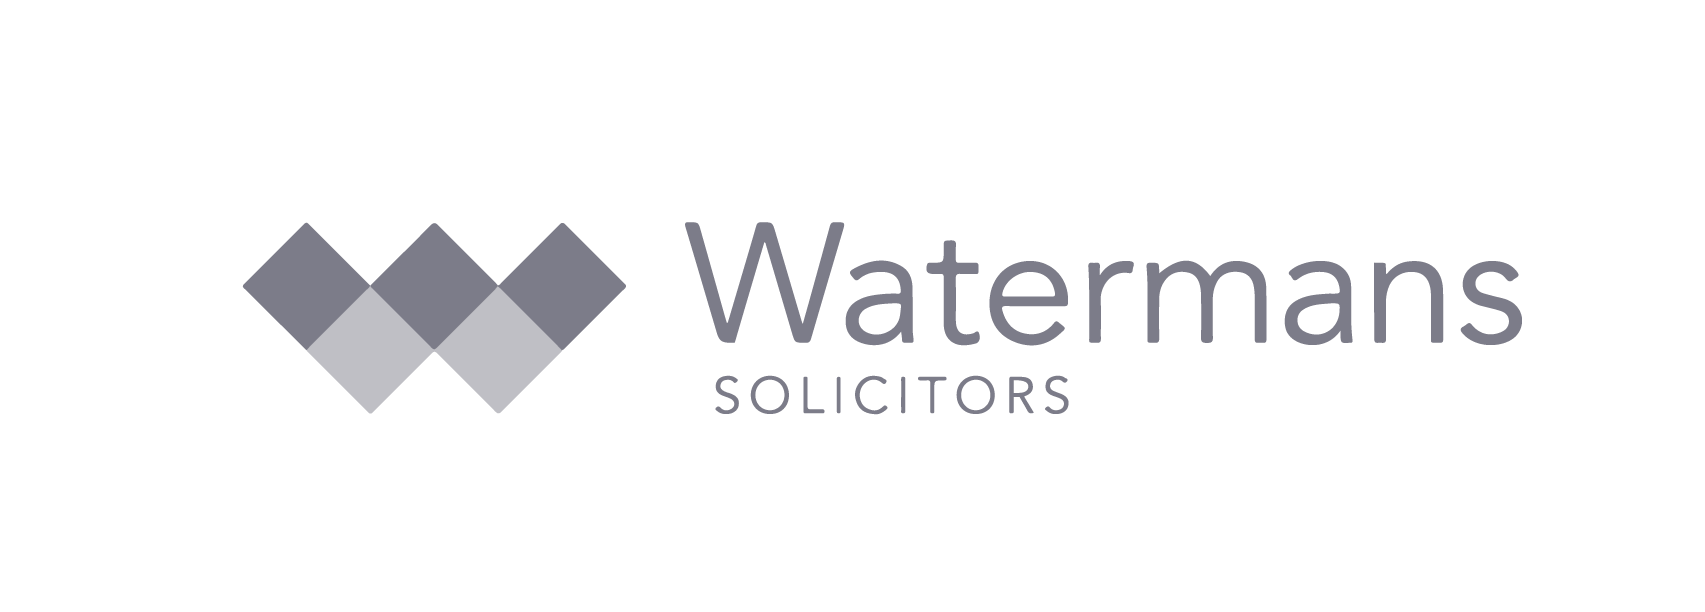 watermans-logo-9